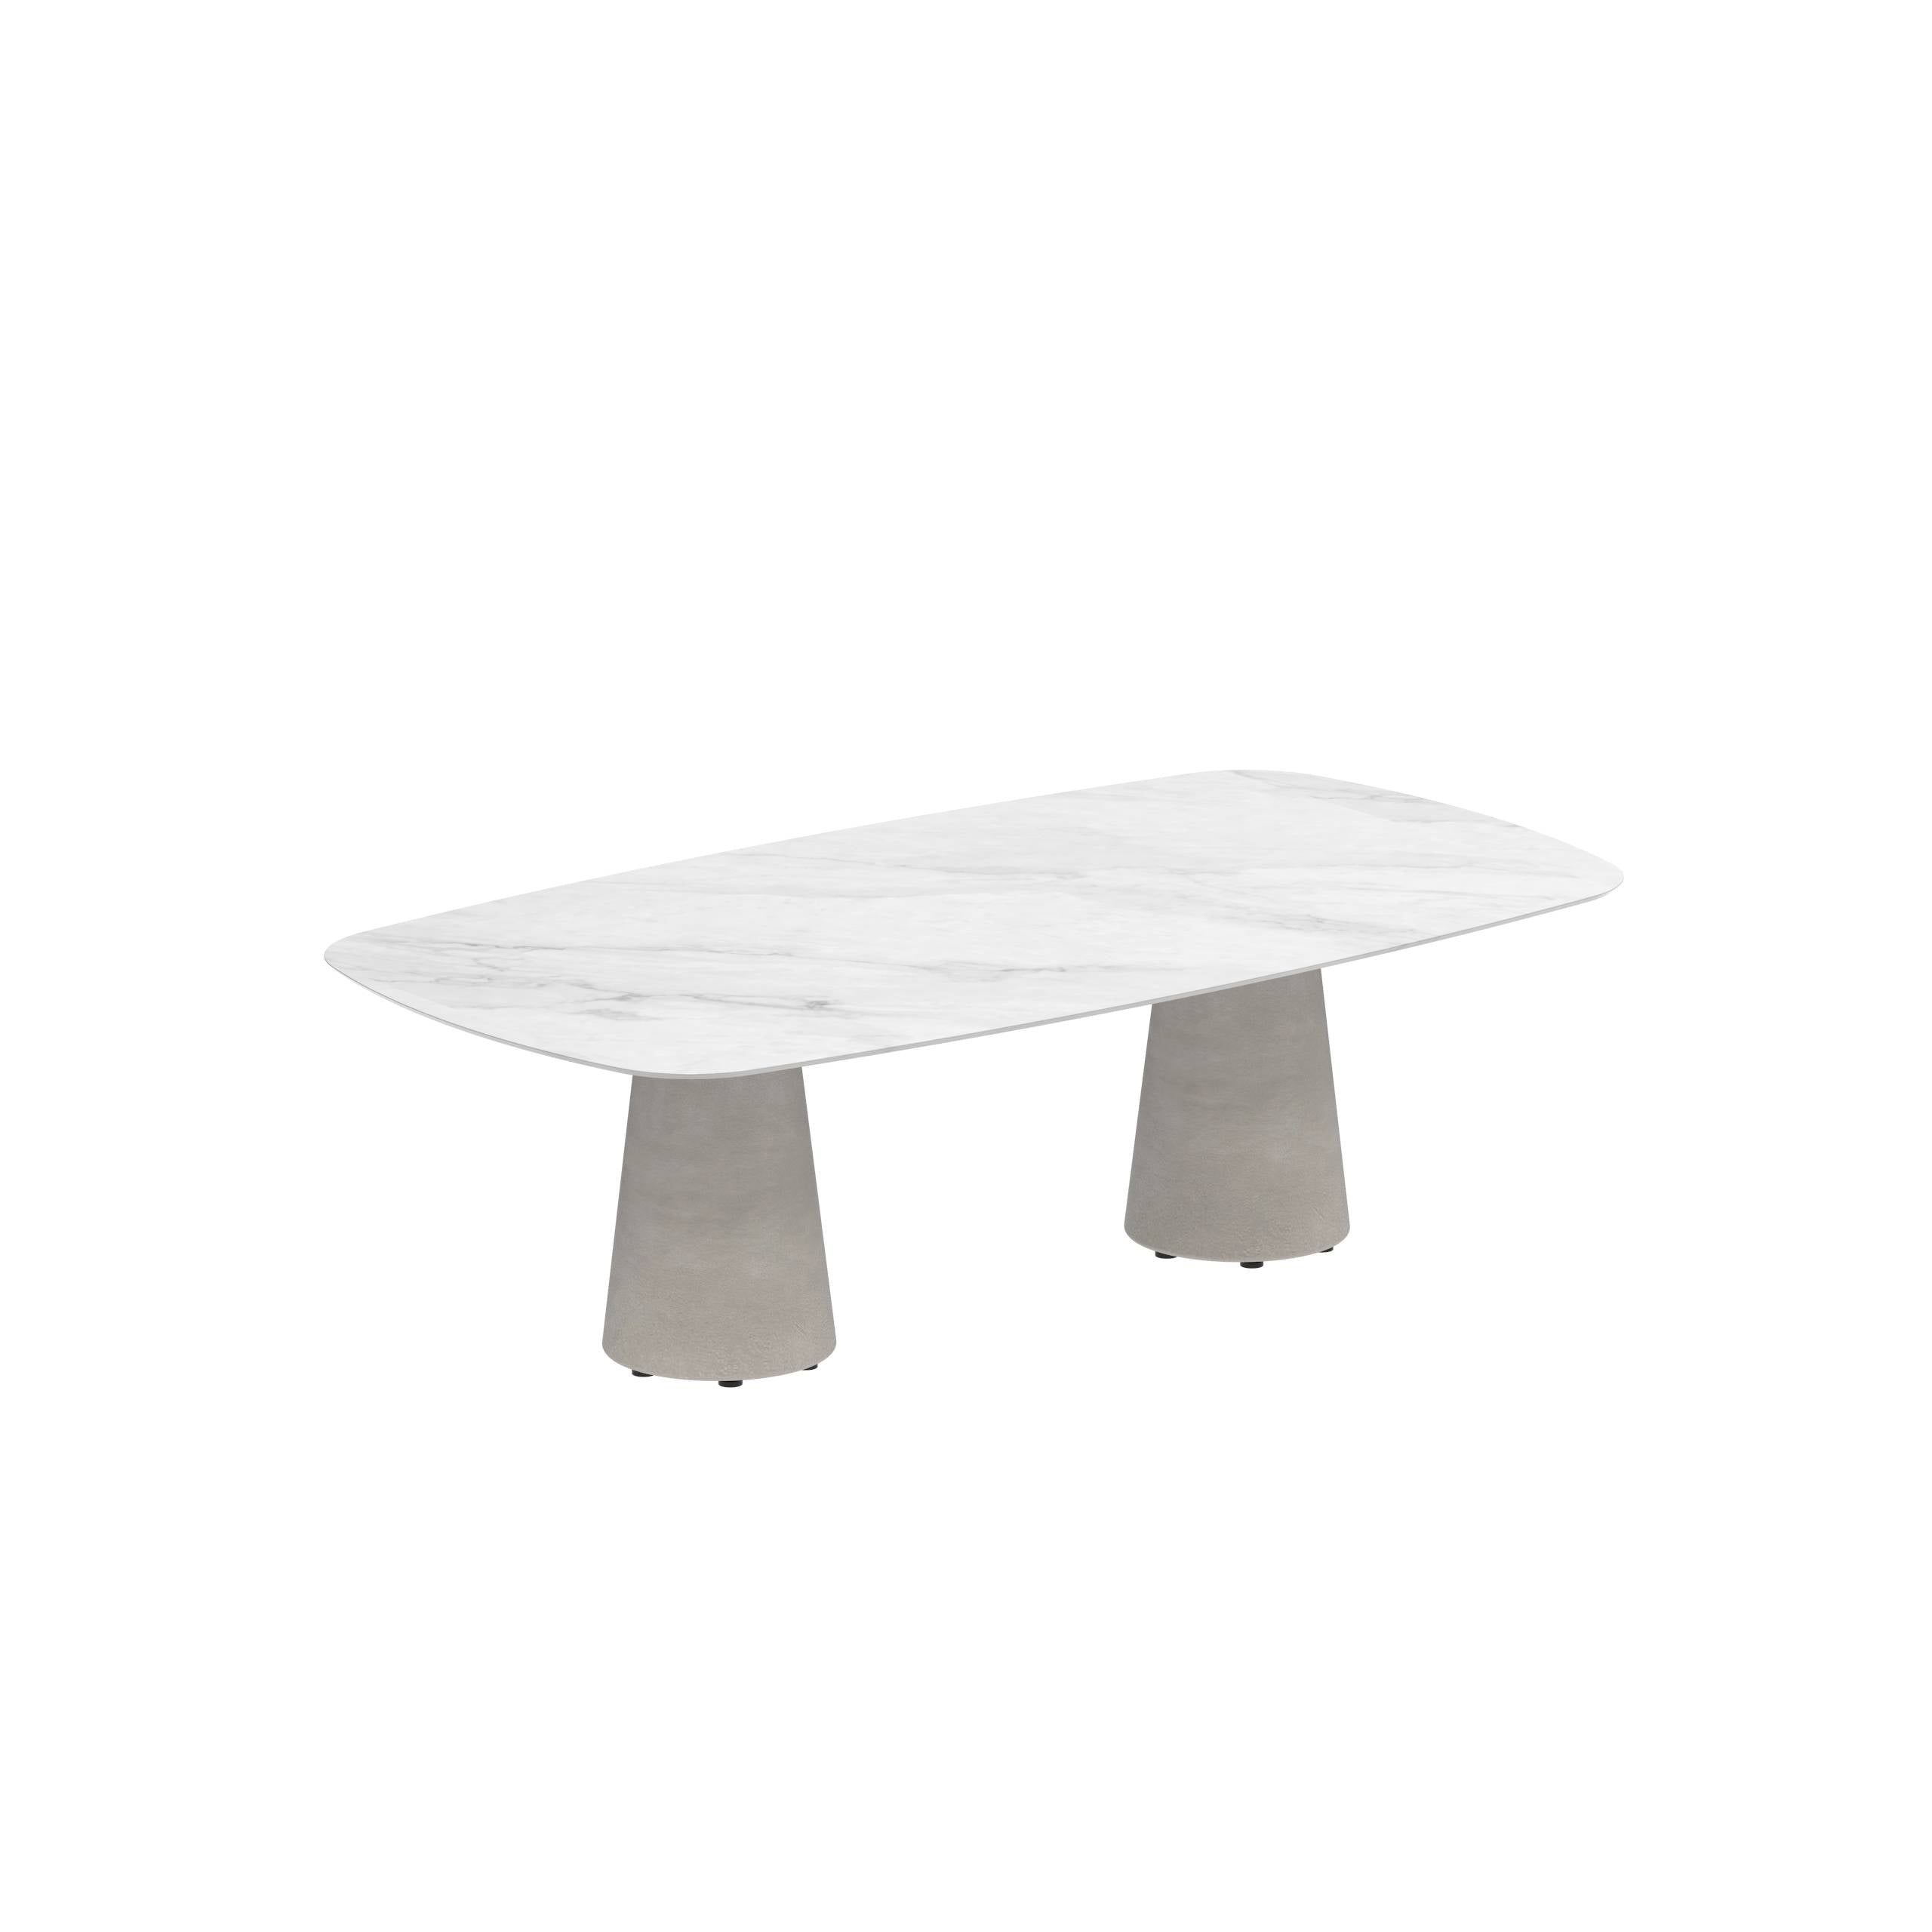 Conix Table 220x120 Cm Low Dining Legs Concrete Cement Grey - Table Top Ceramic Bianco Statuario